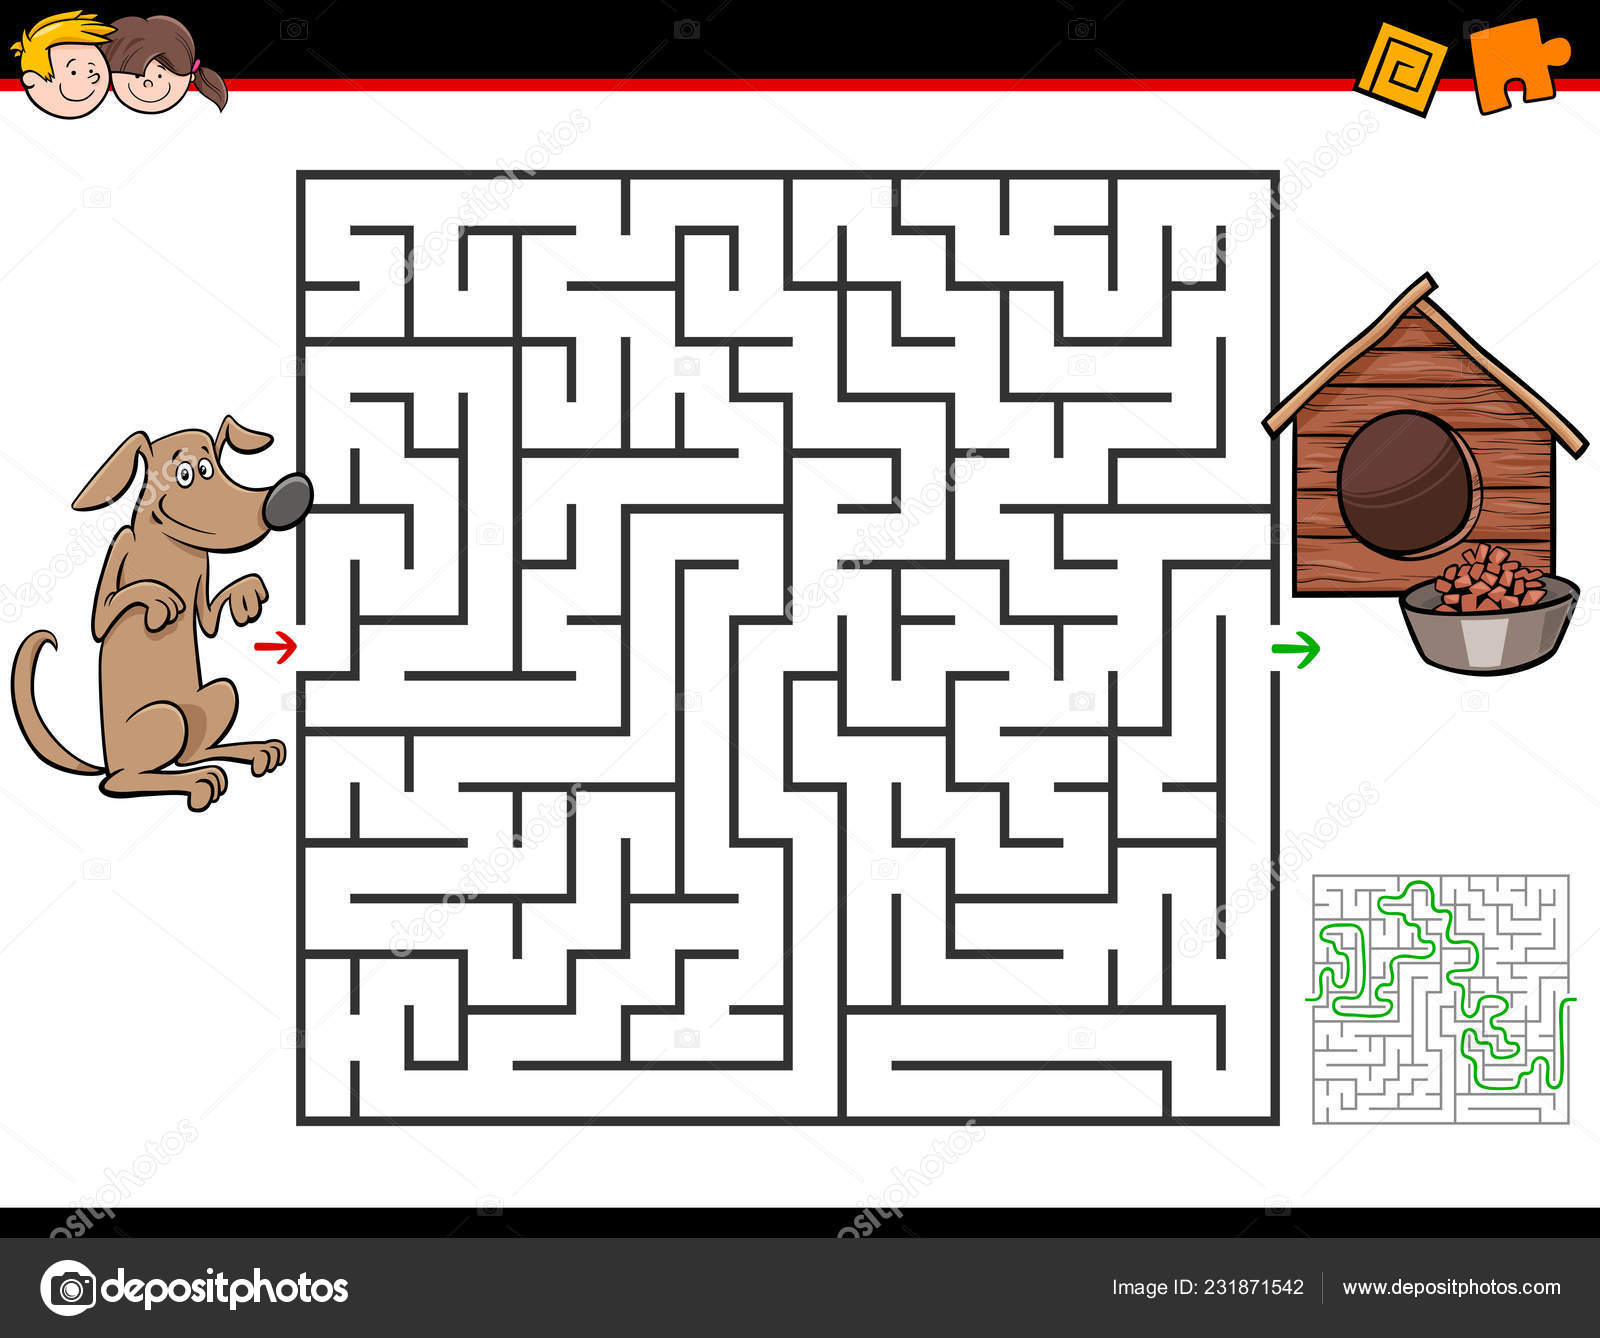 https://st4.depositphotos.com/1024768/23187/v/1600/depositphotos_231871542-stock-illustration-cartoon-illustration-education-maze-labyrinth.jpg